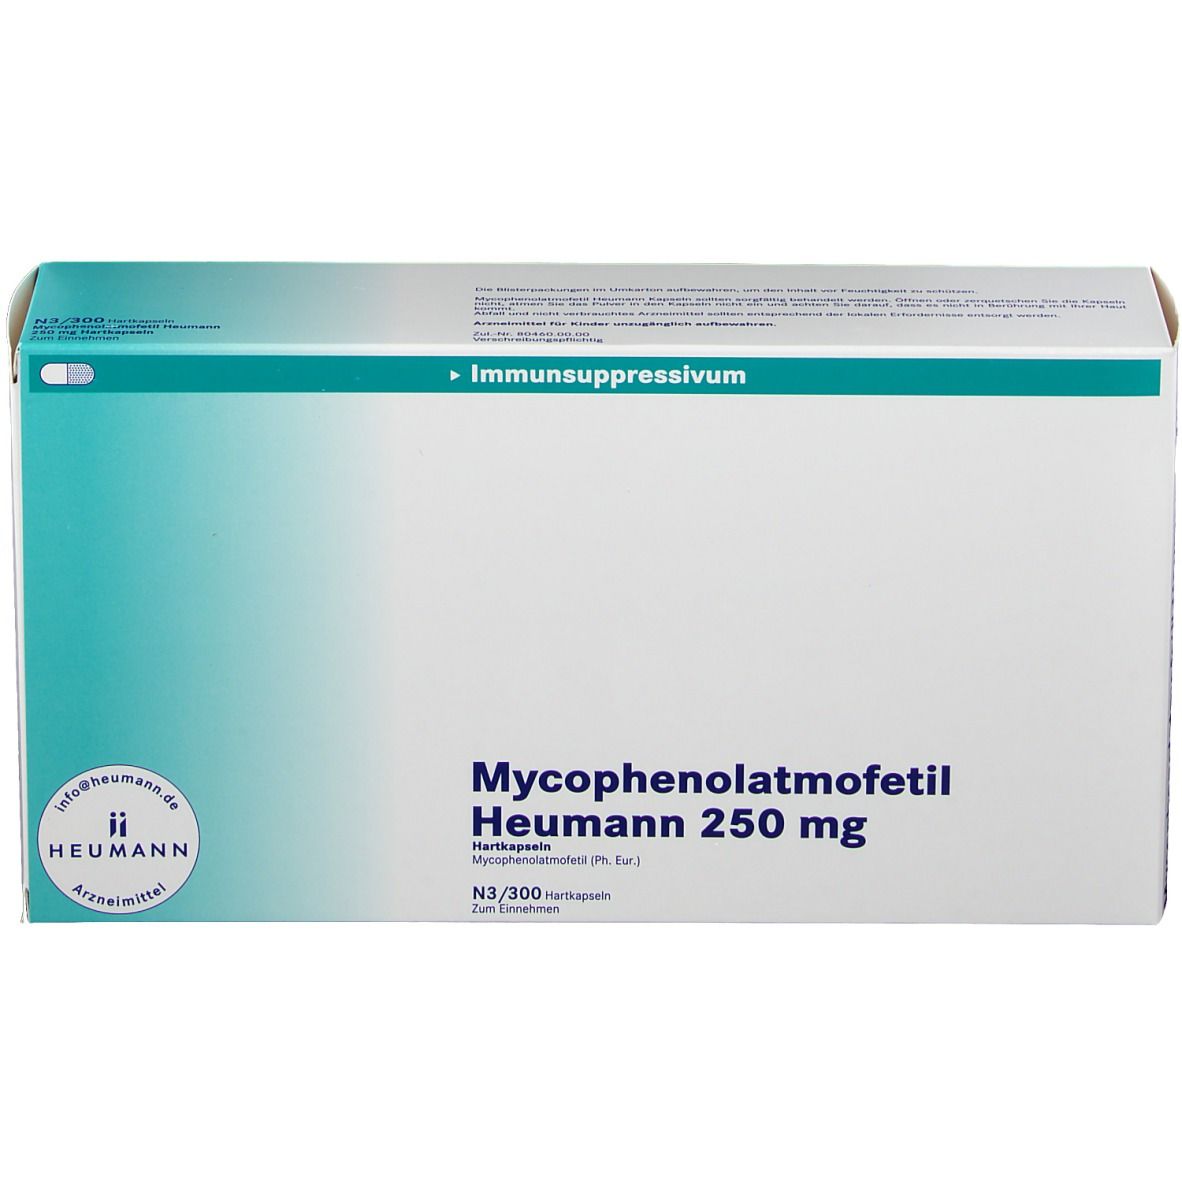 Mycophenolatmofetil Heumann 250 mg